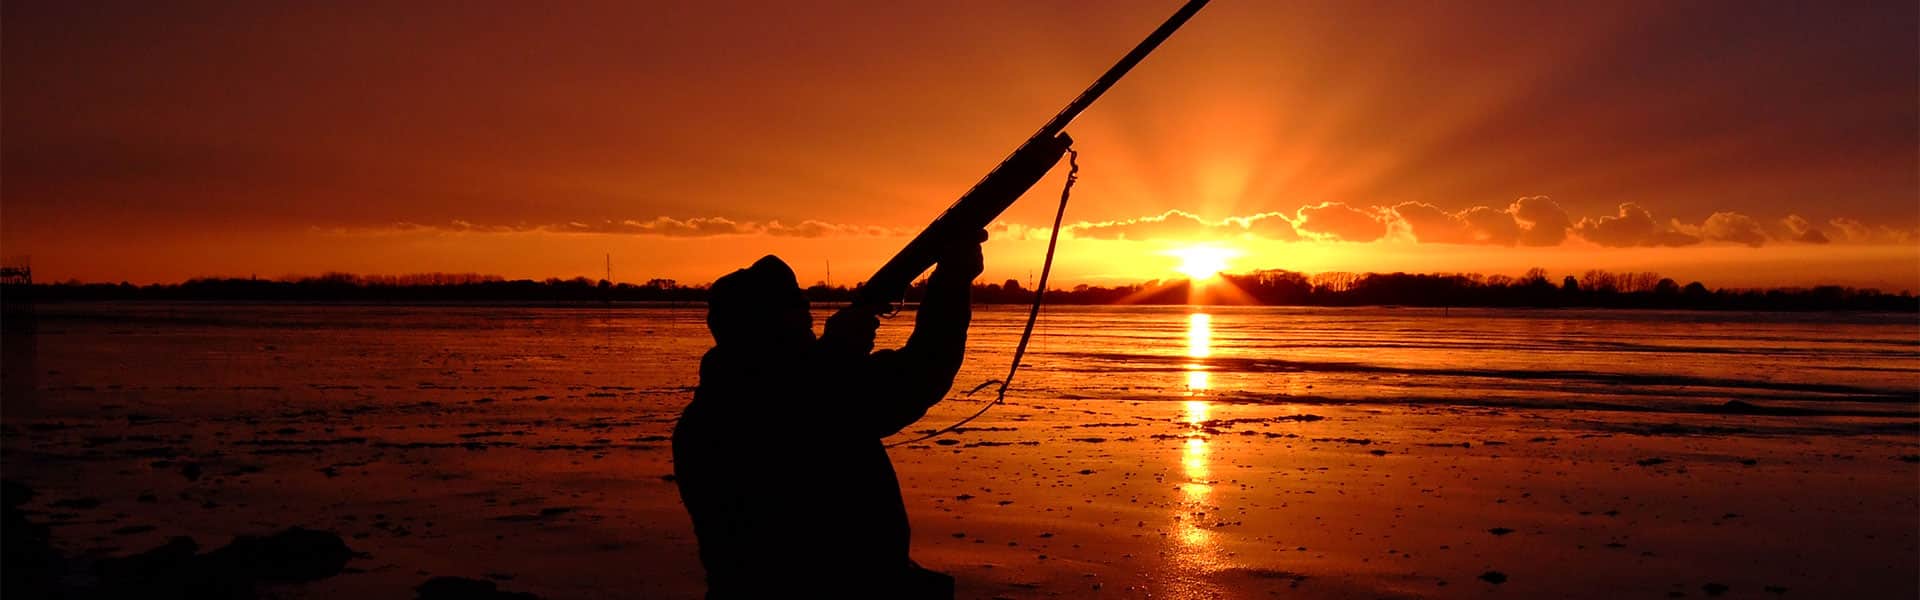 A wildfowler aiming a shotgun at sunset